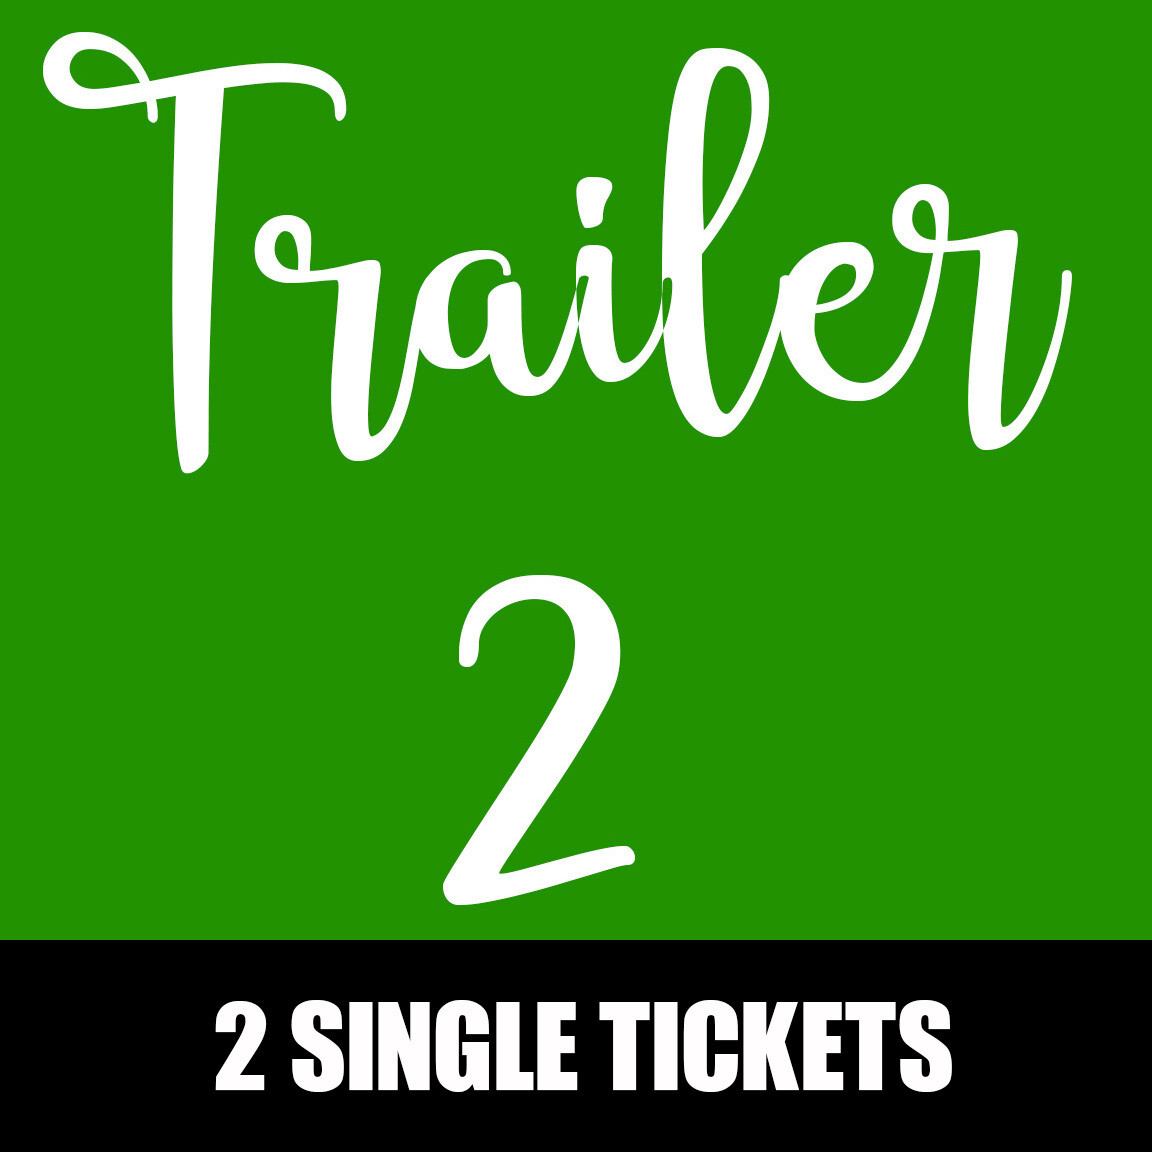 Trailer 2 - December 1st @ 7pm - 2 Single Tickets